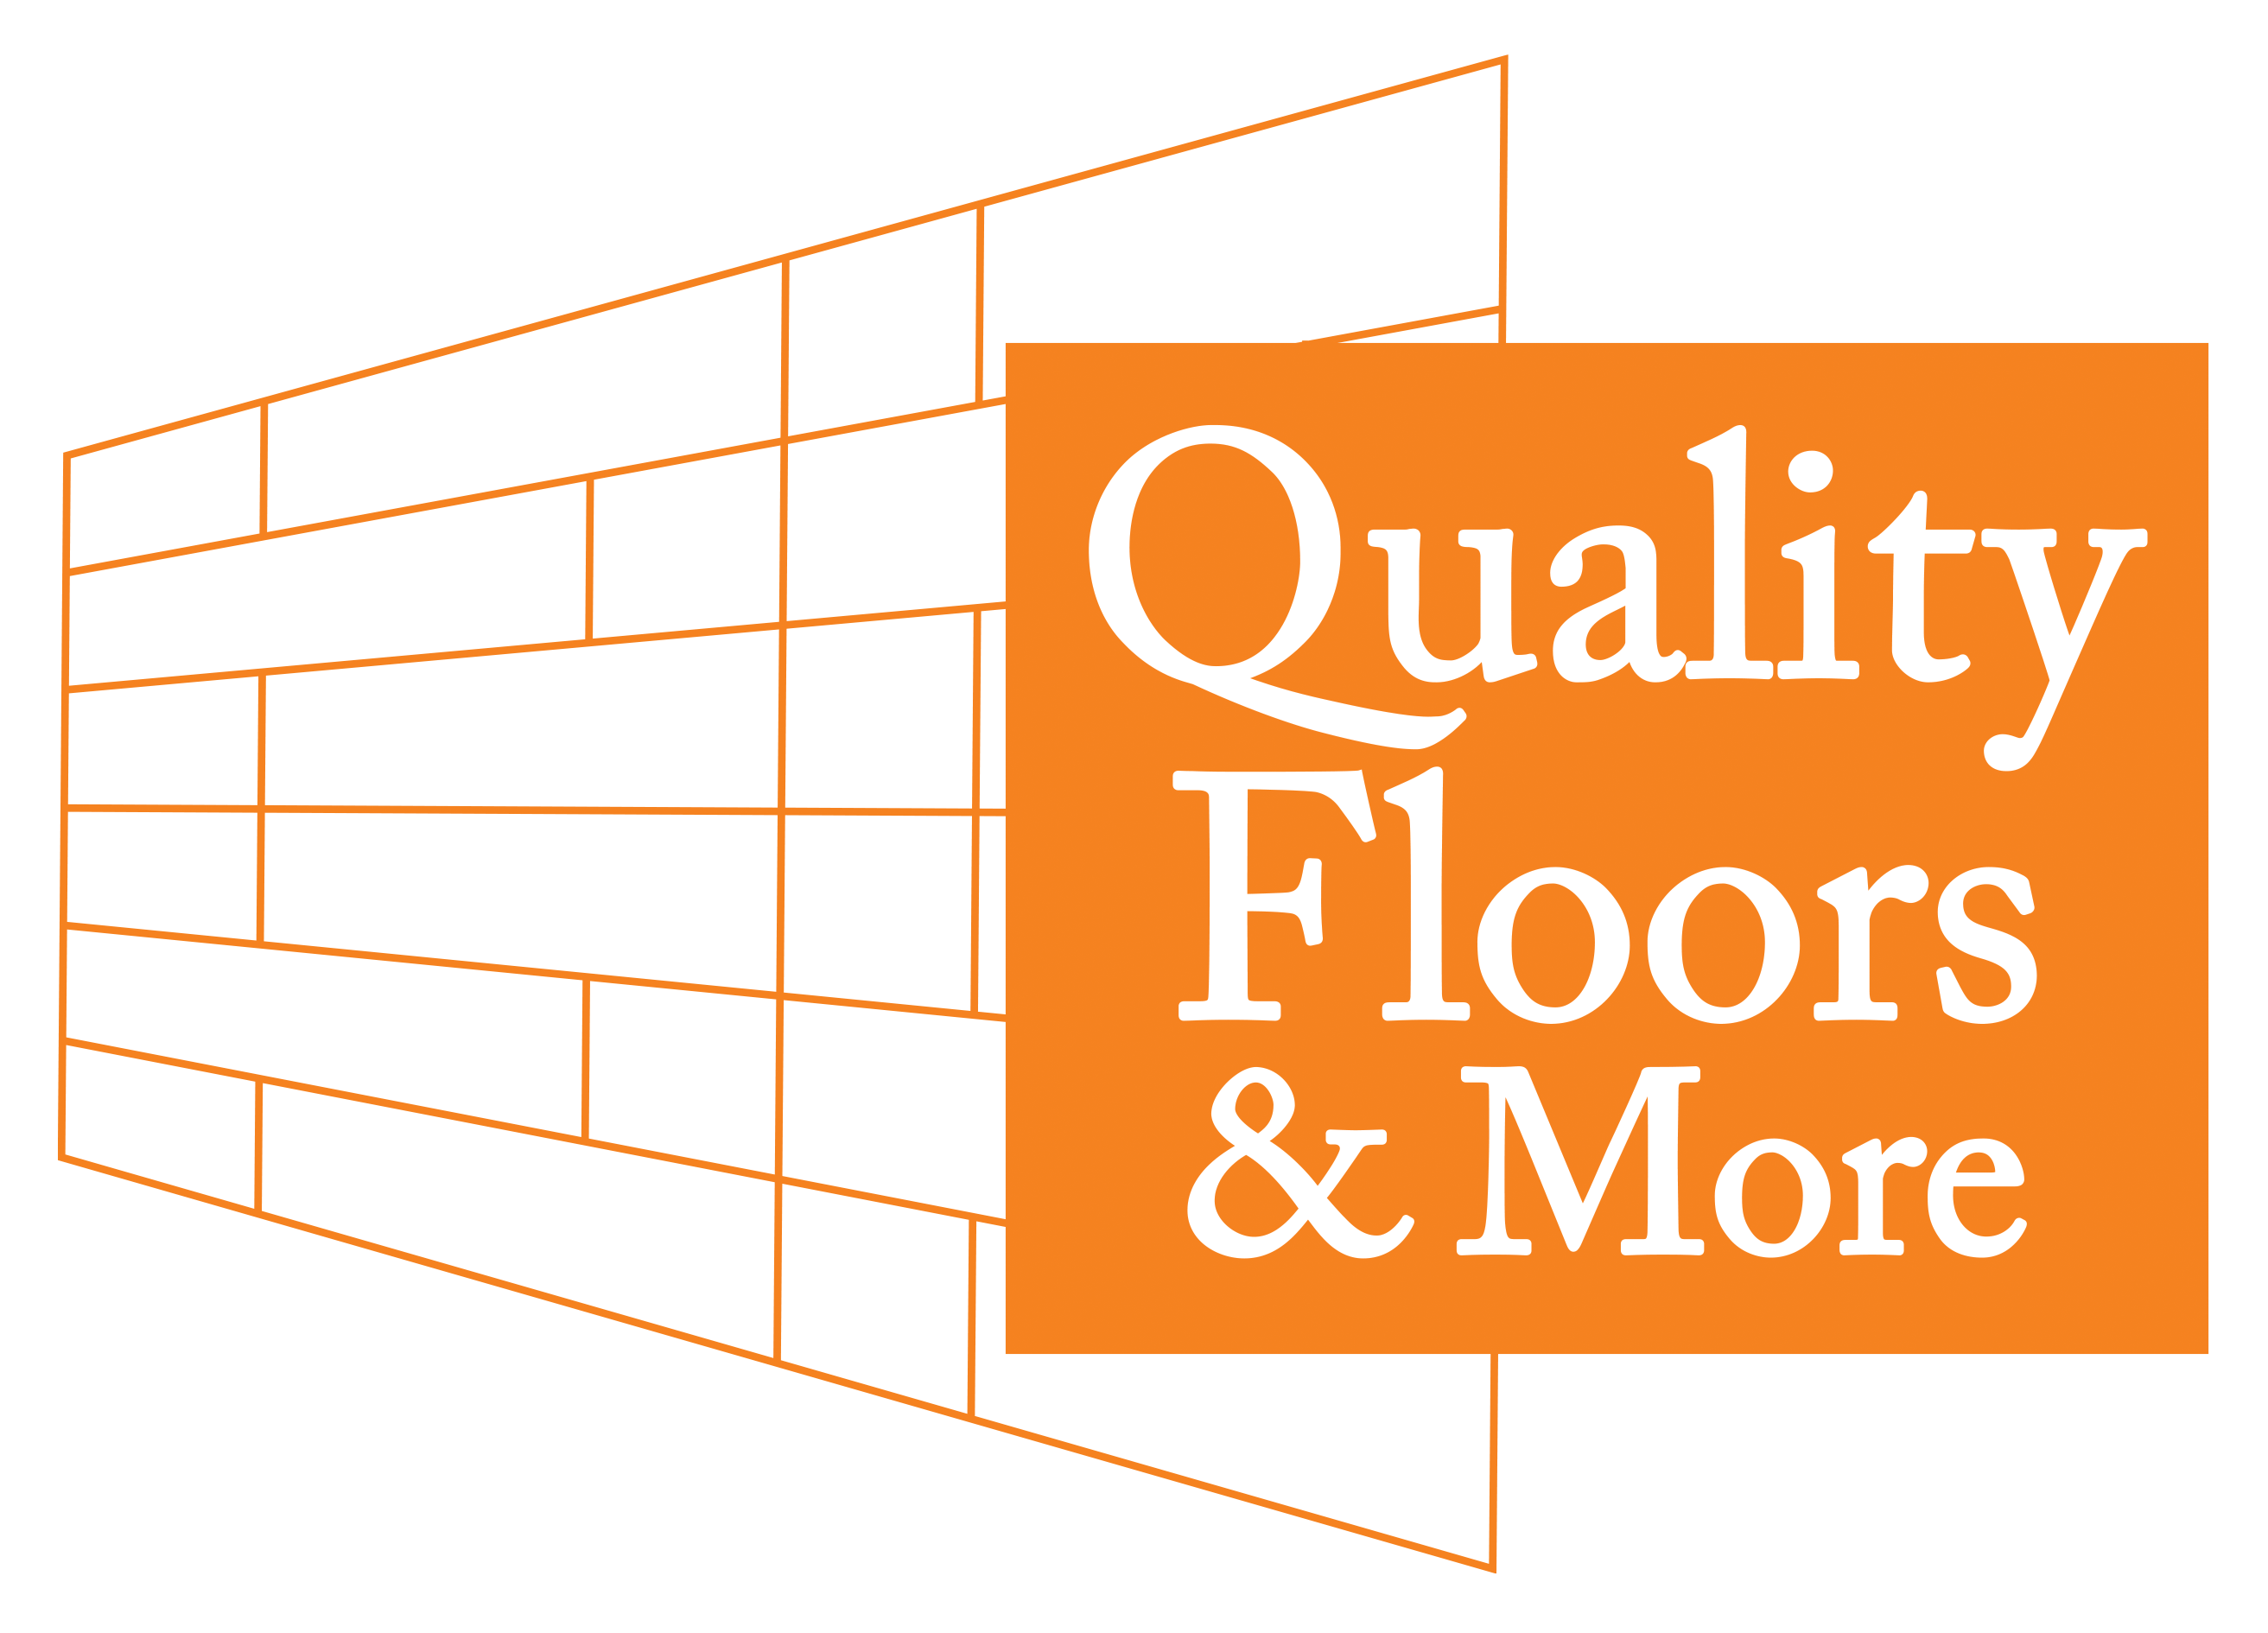 Quality Floors & More